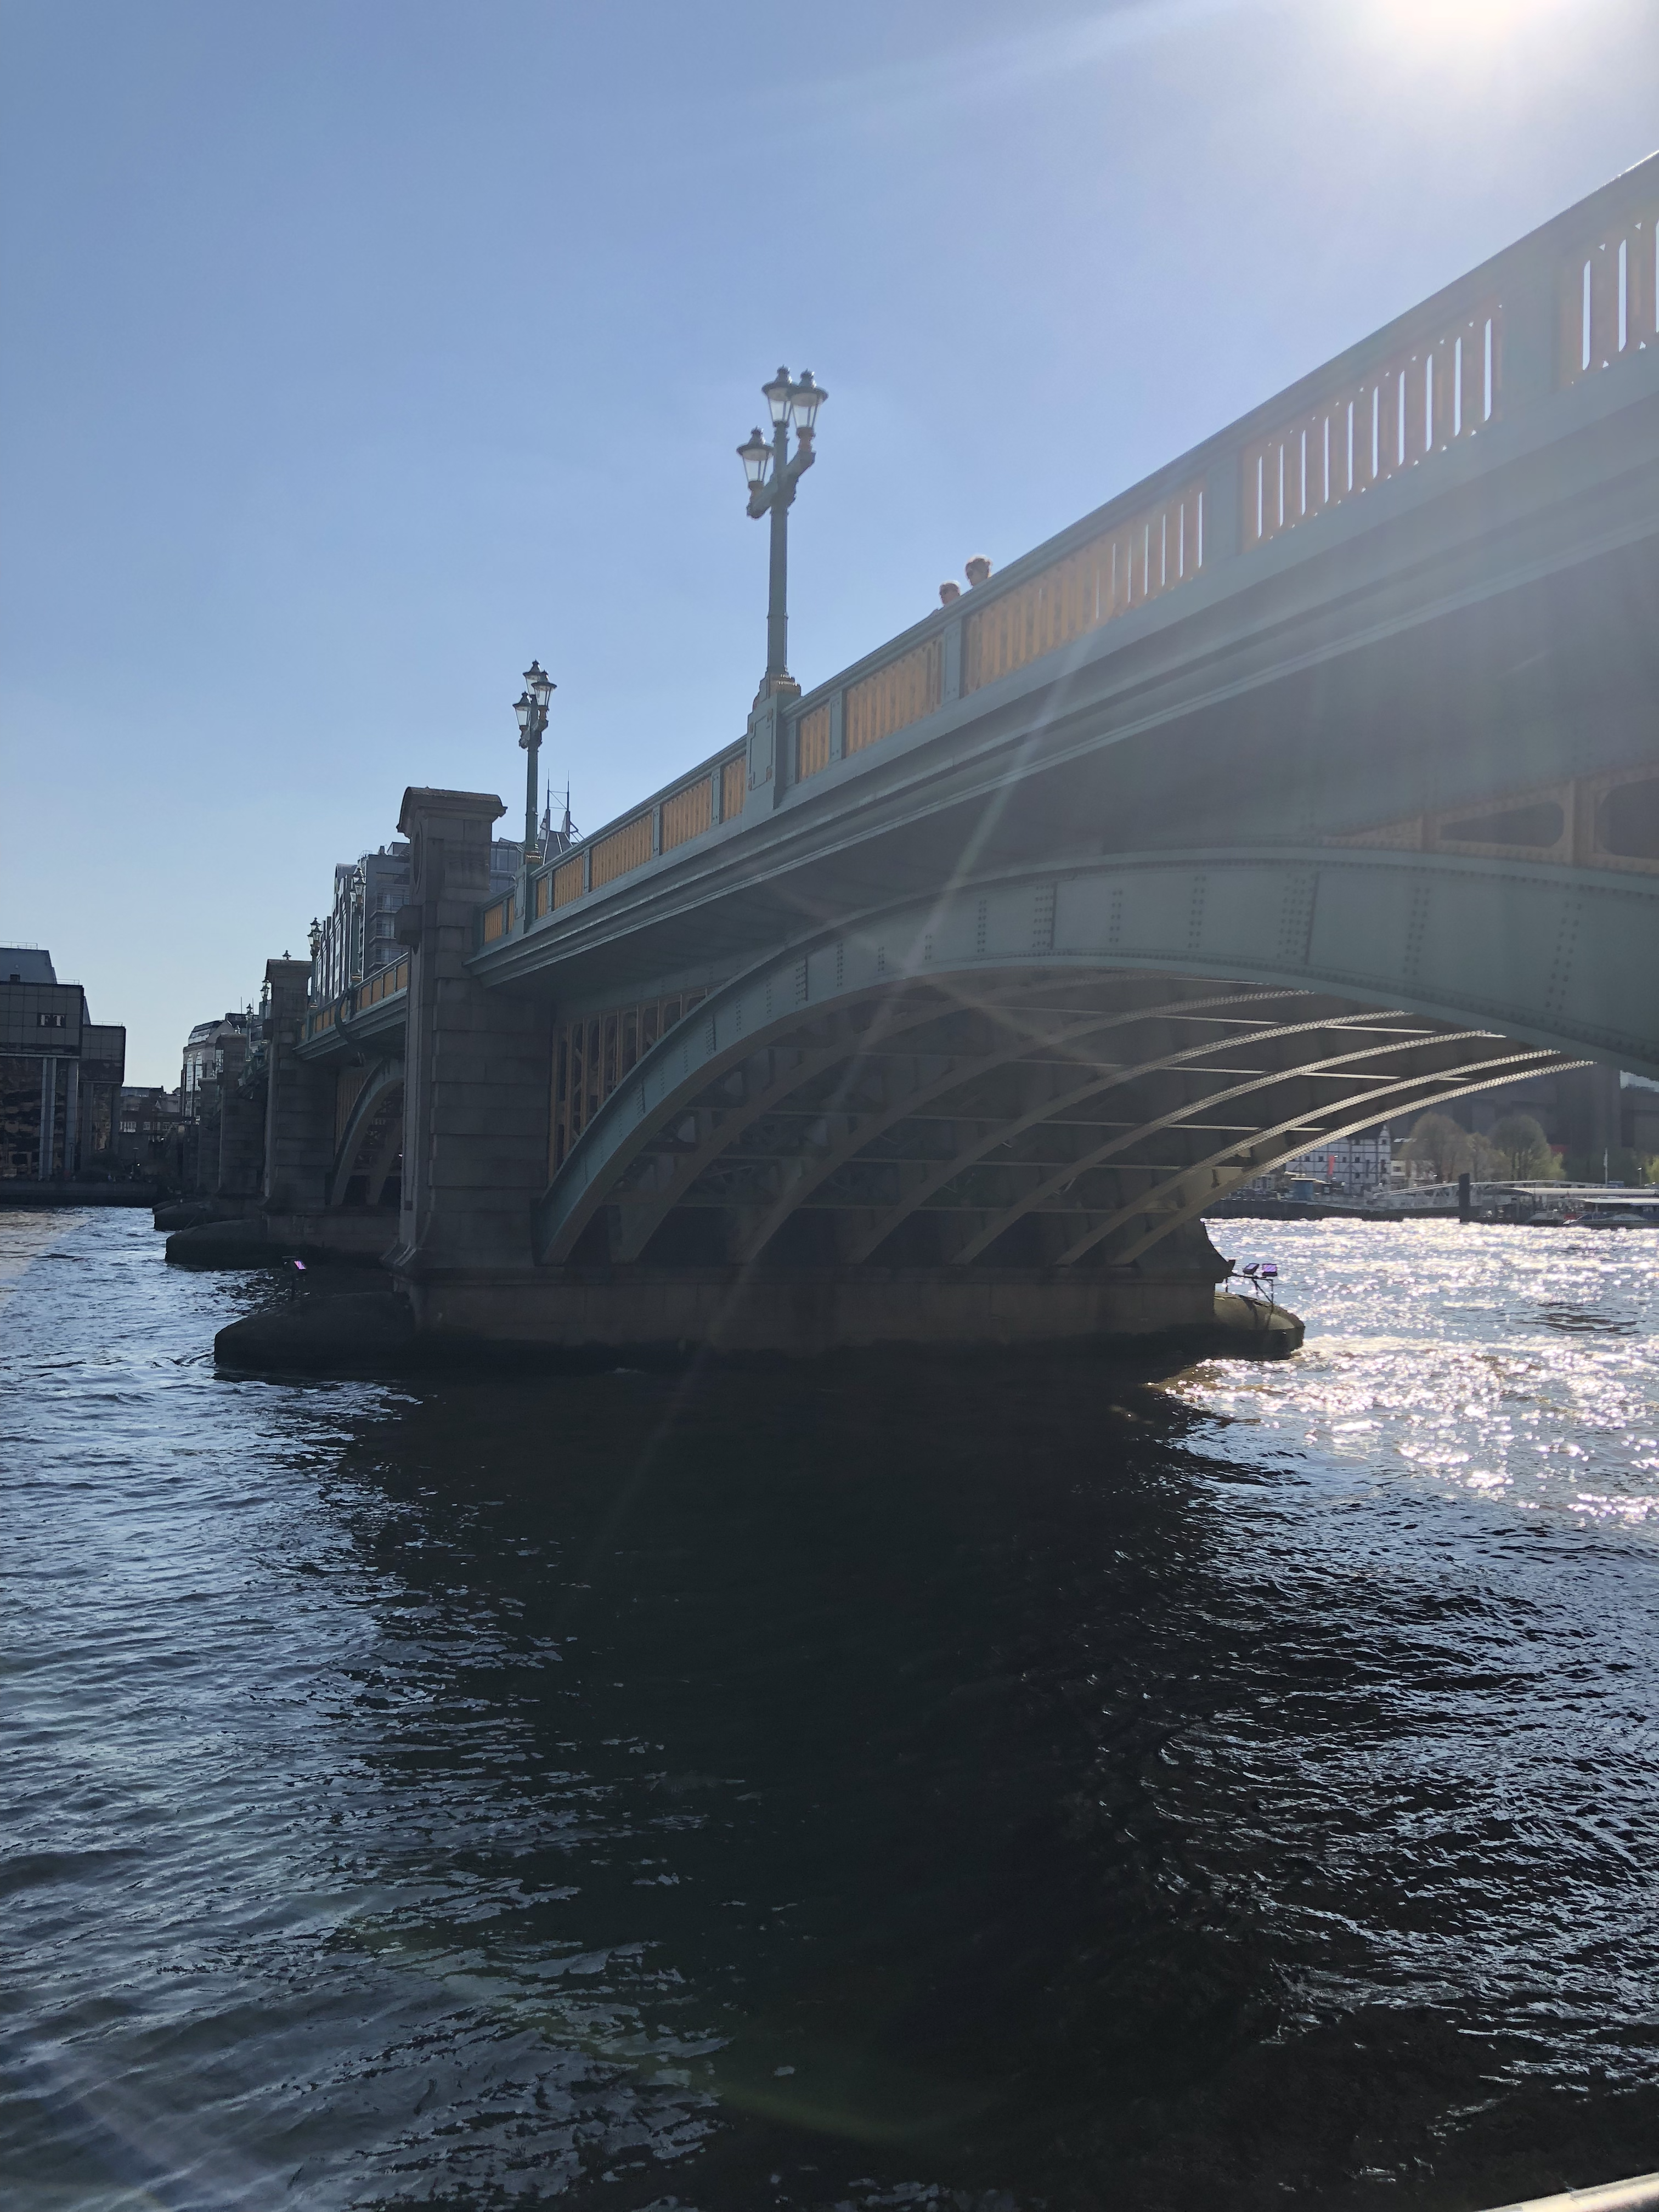  Blackfriars Bridge, London, 2019.